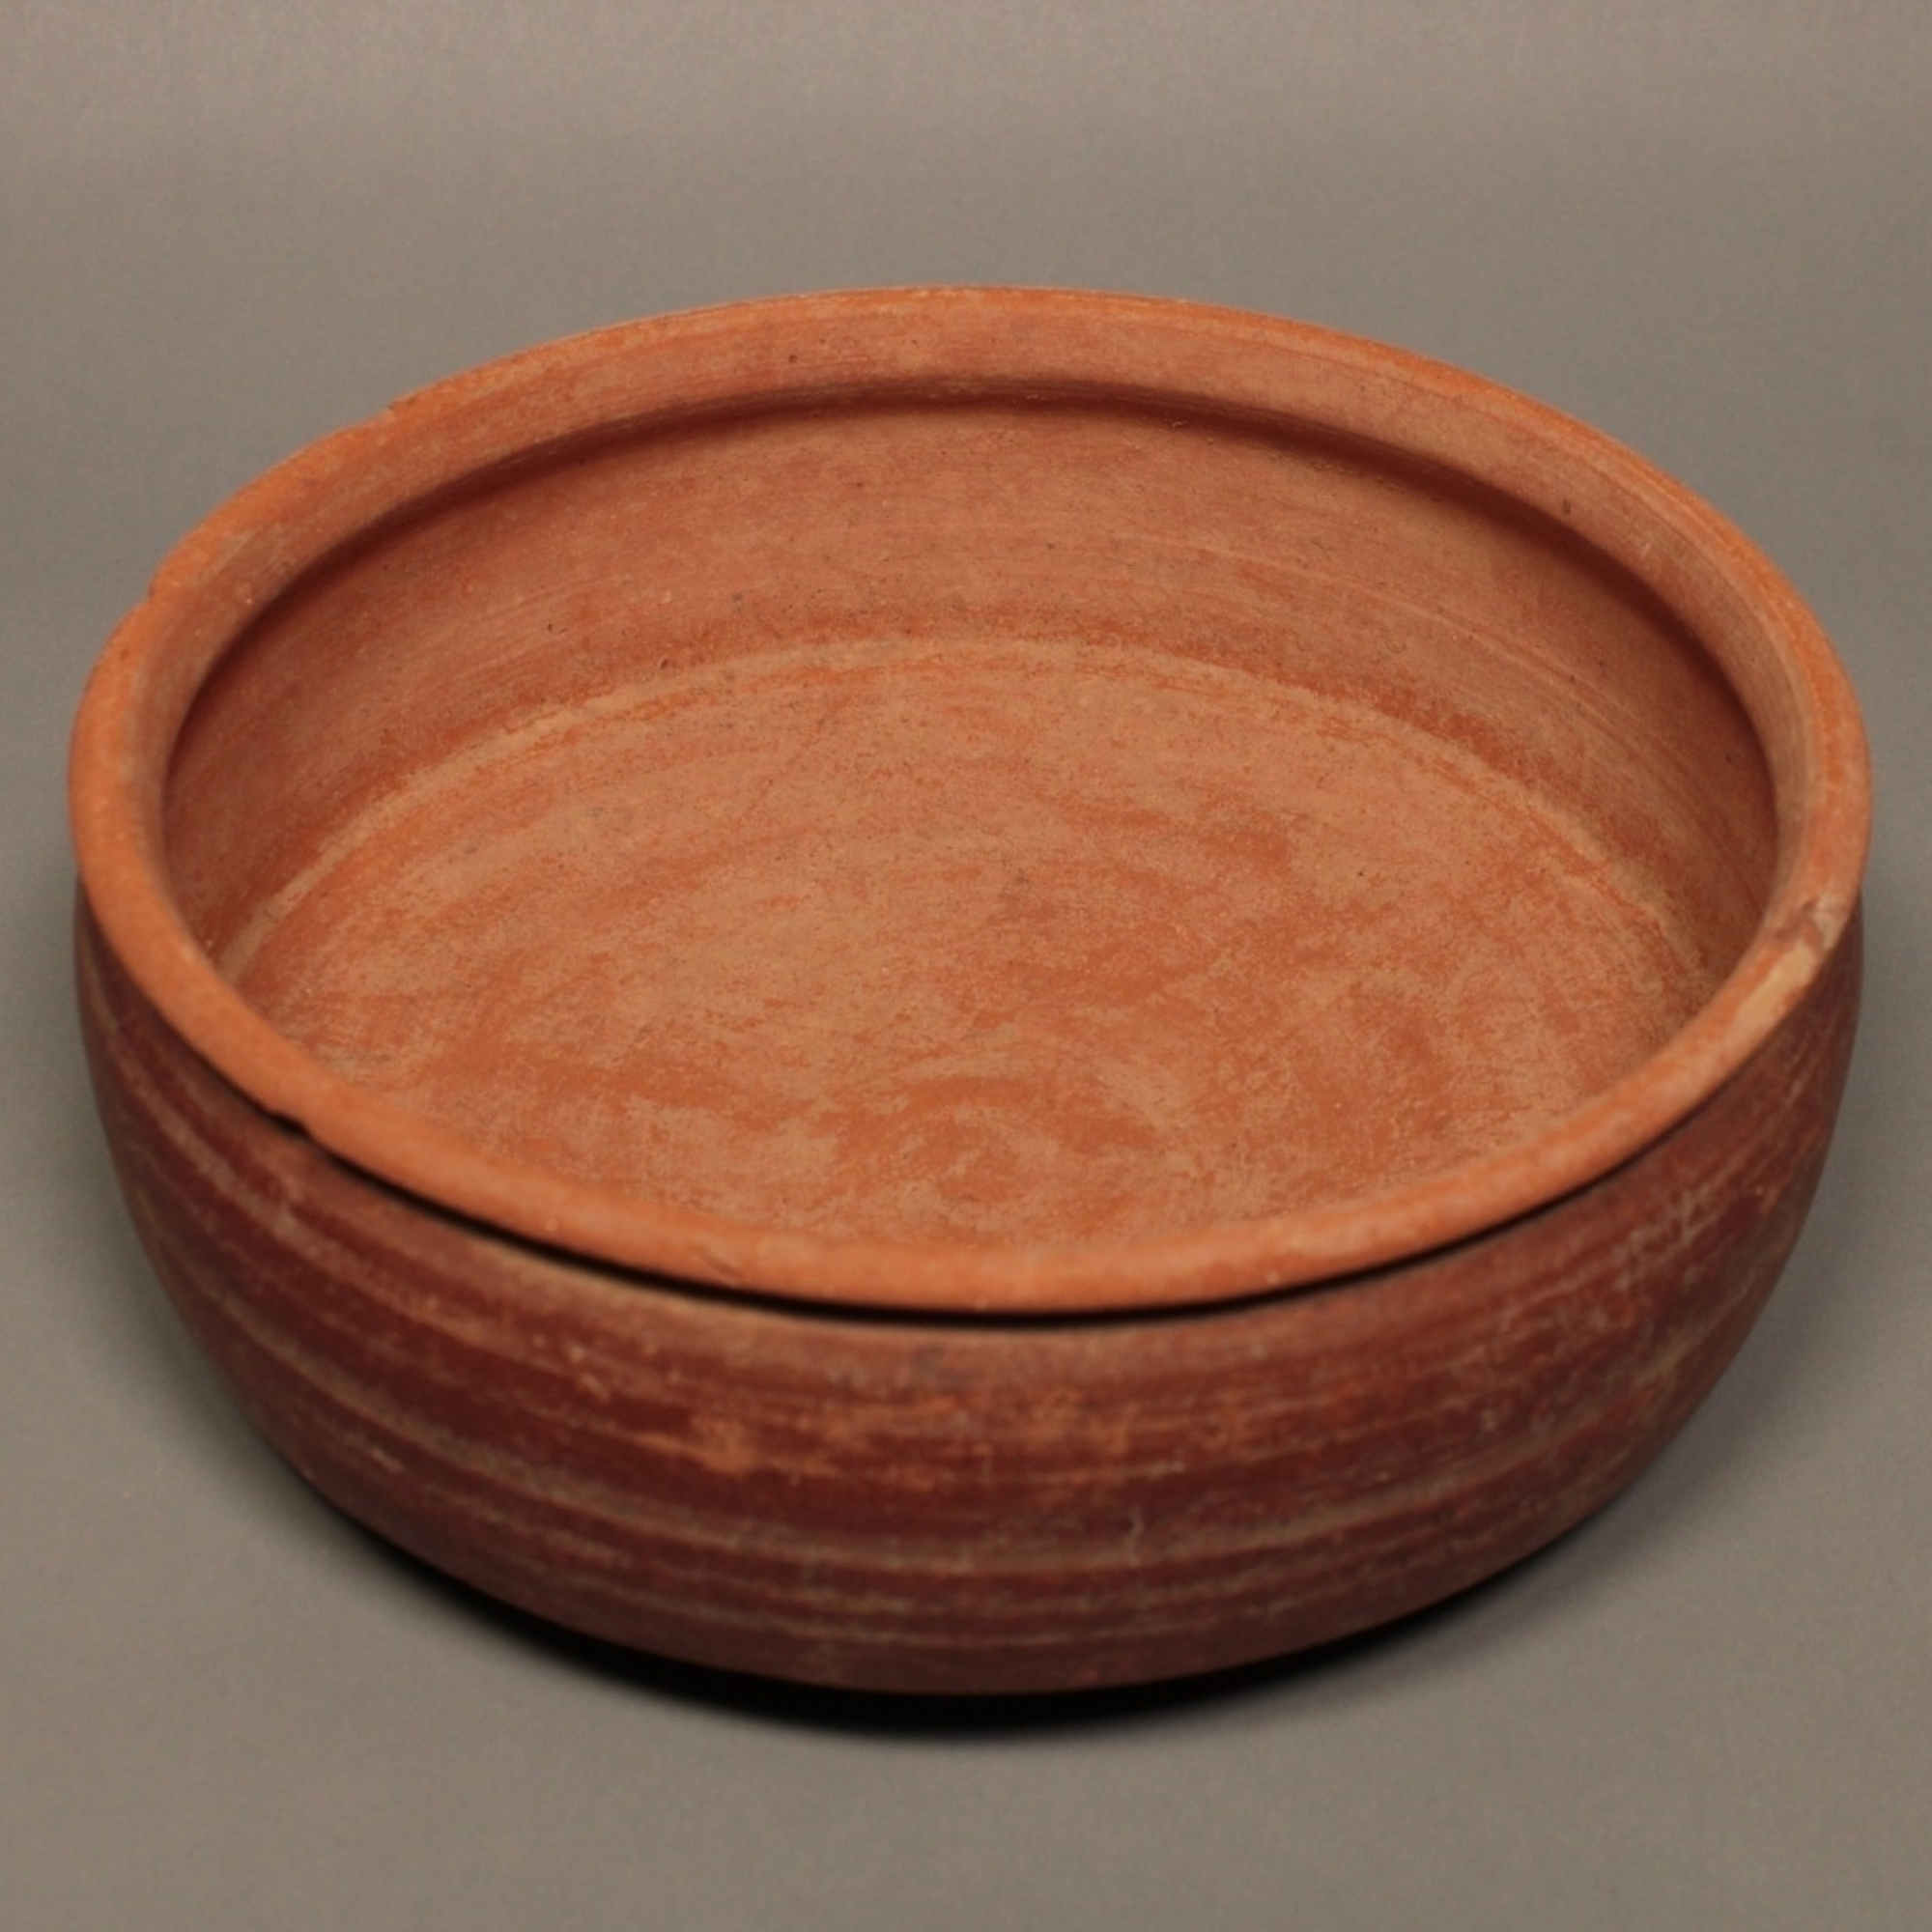 Roman Terracota Redware Bowl, 7.8 inch - c. 1 to 400 CE - Roman Empire - 10/10/23 Auction